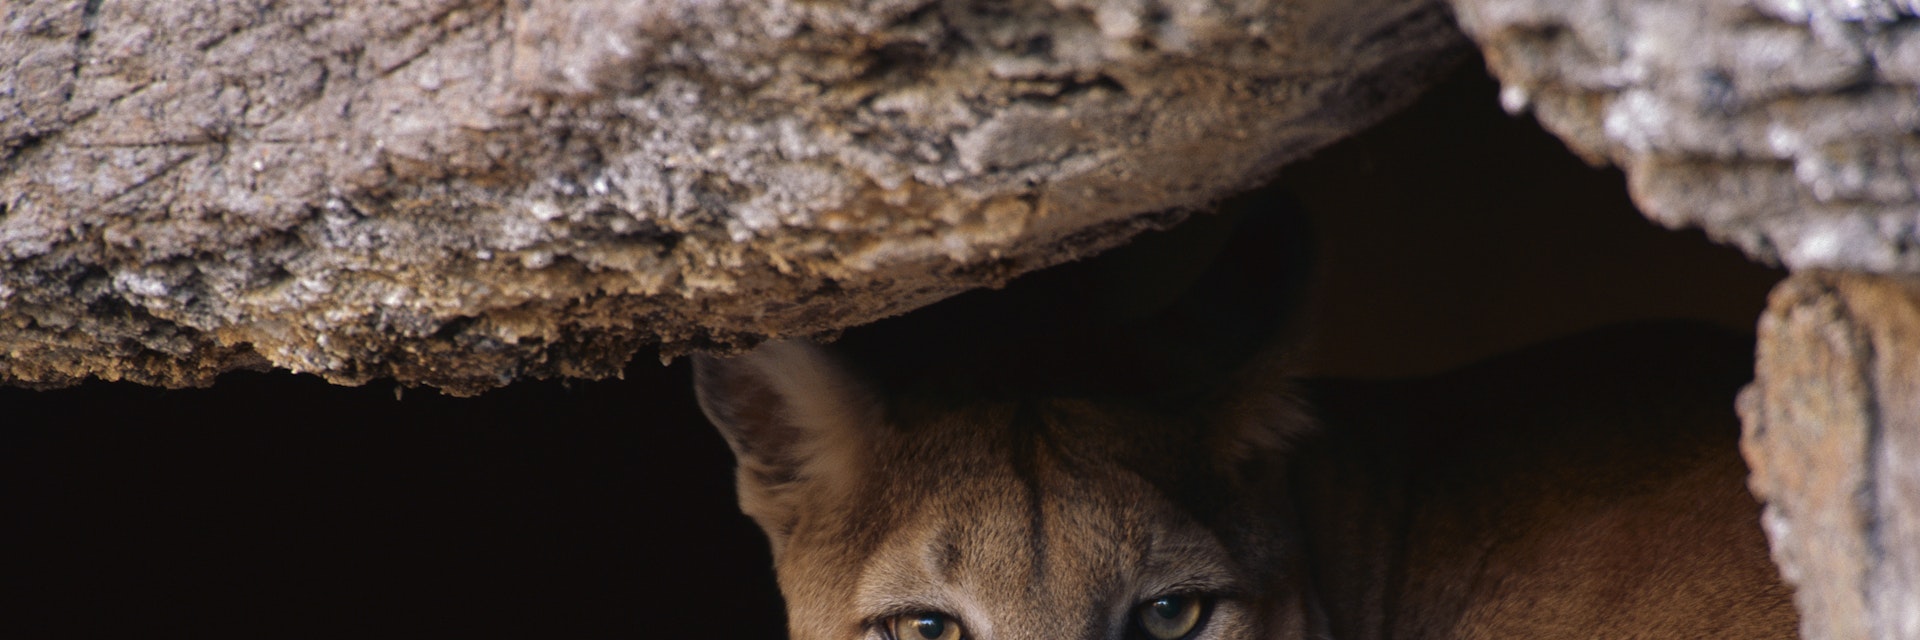 Mountain Lion (Puma concolor) peering from cave, Arizona-Sonora Desert Museum, Arizona